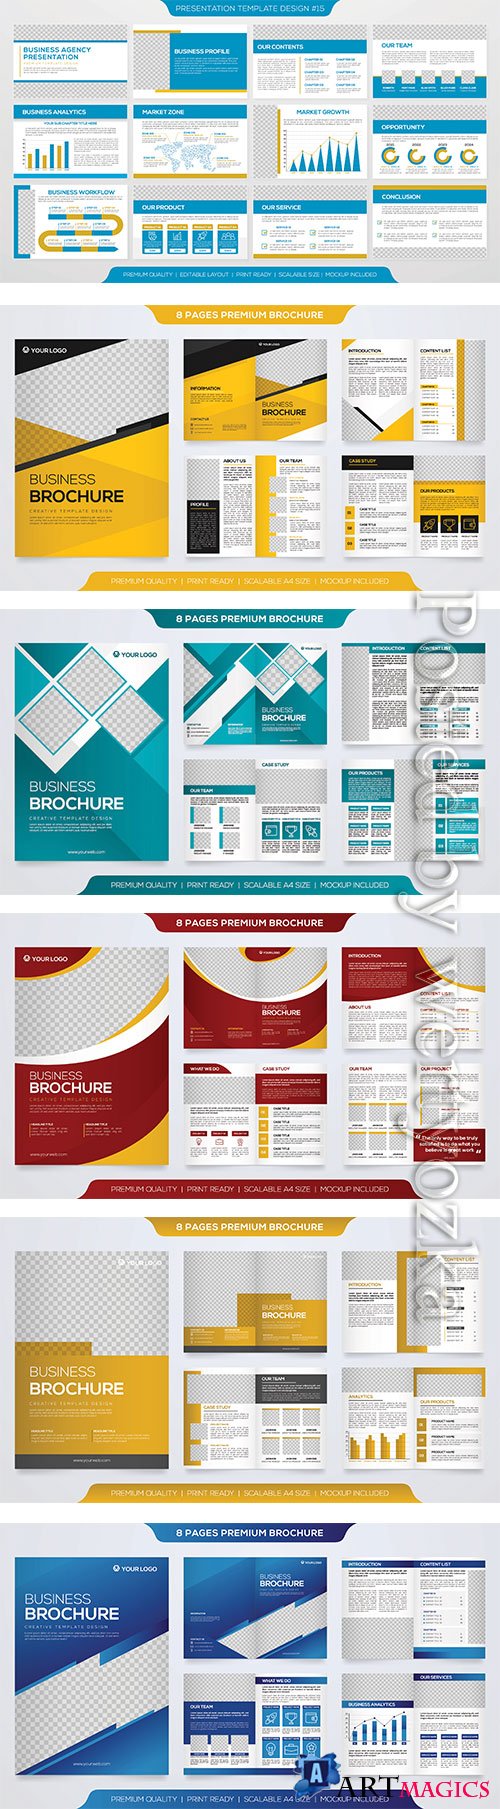 Brochure template design with minimalist concept